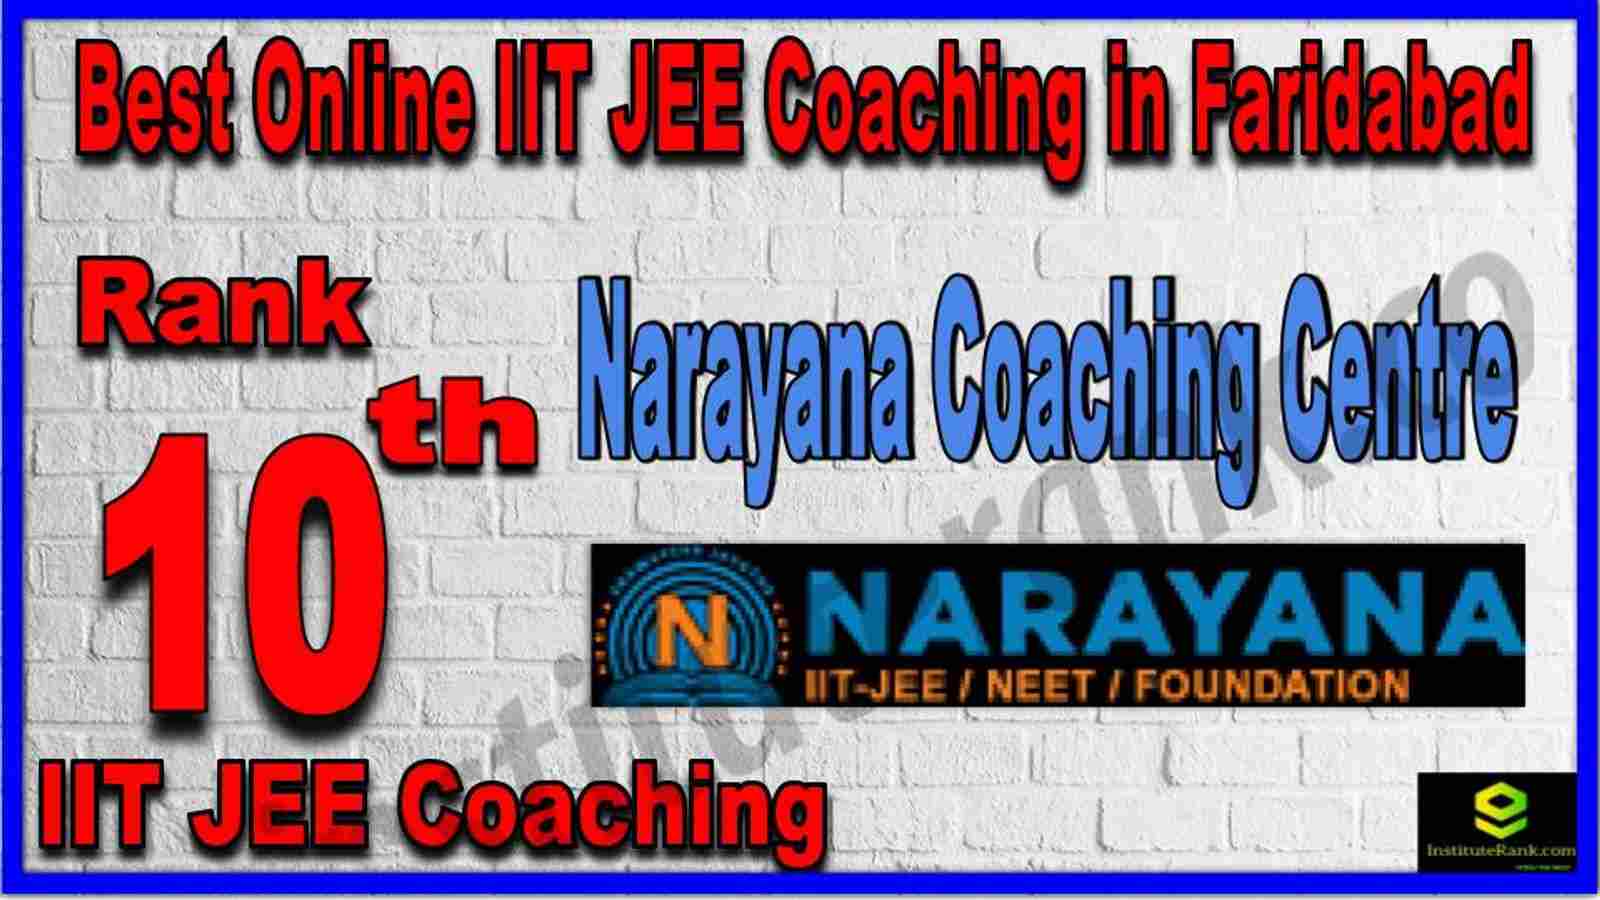 Rank 10th Best Online IIT JEE Coaching in Faridabad